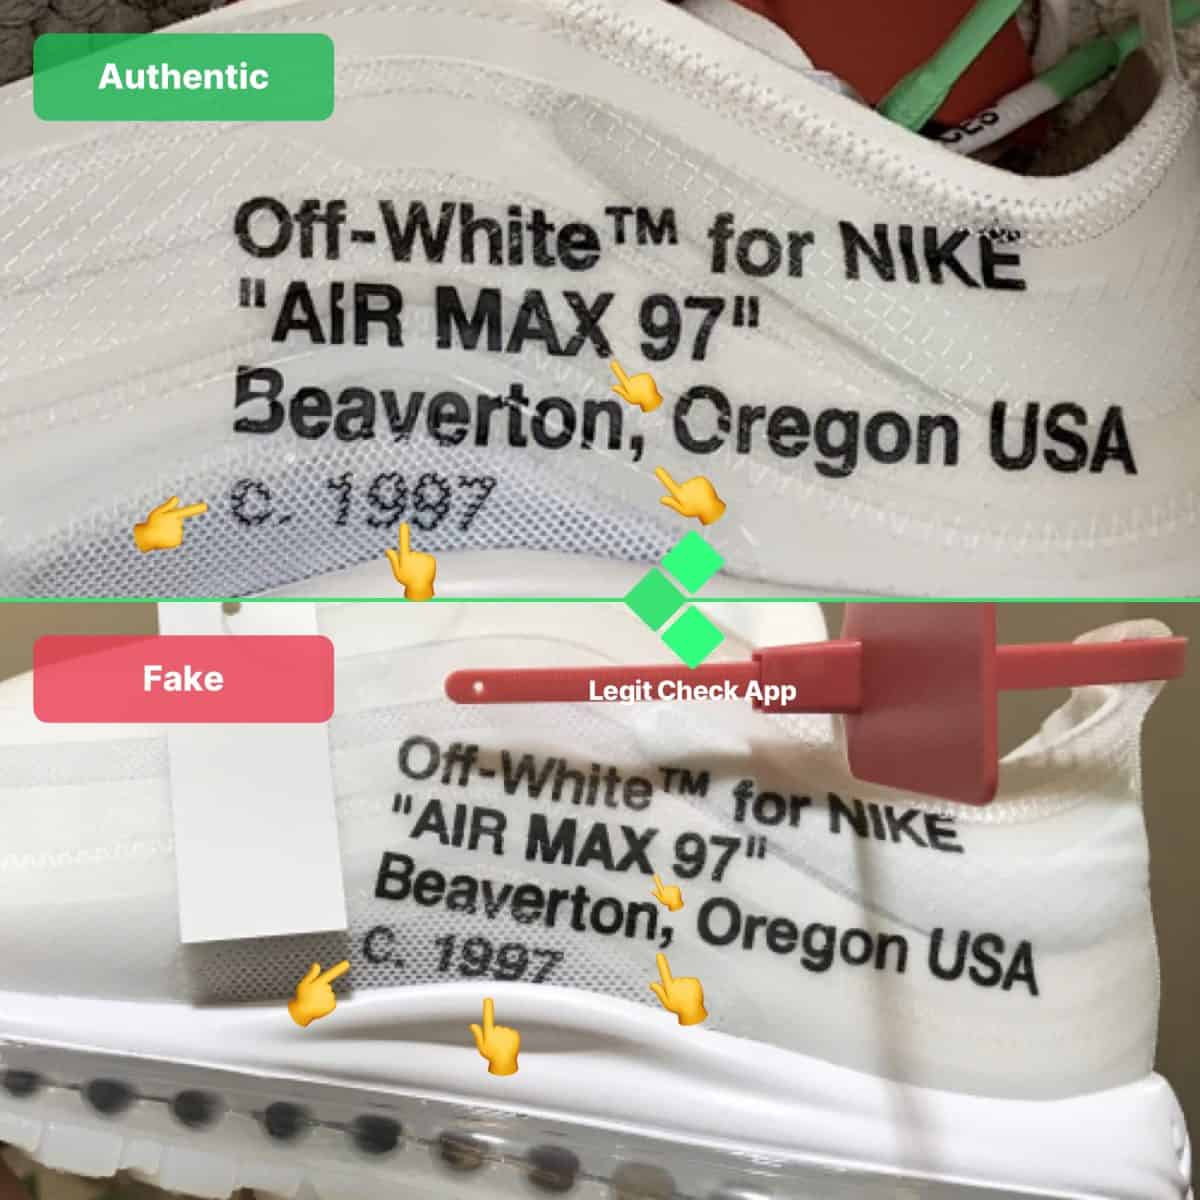 fake vs real off white